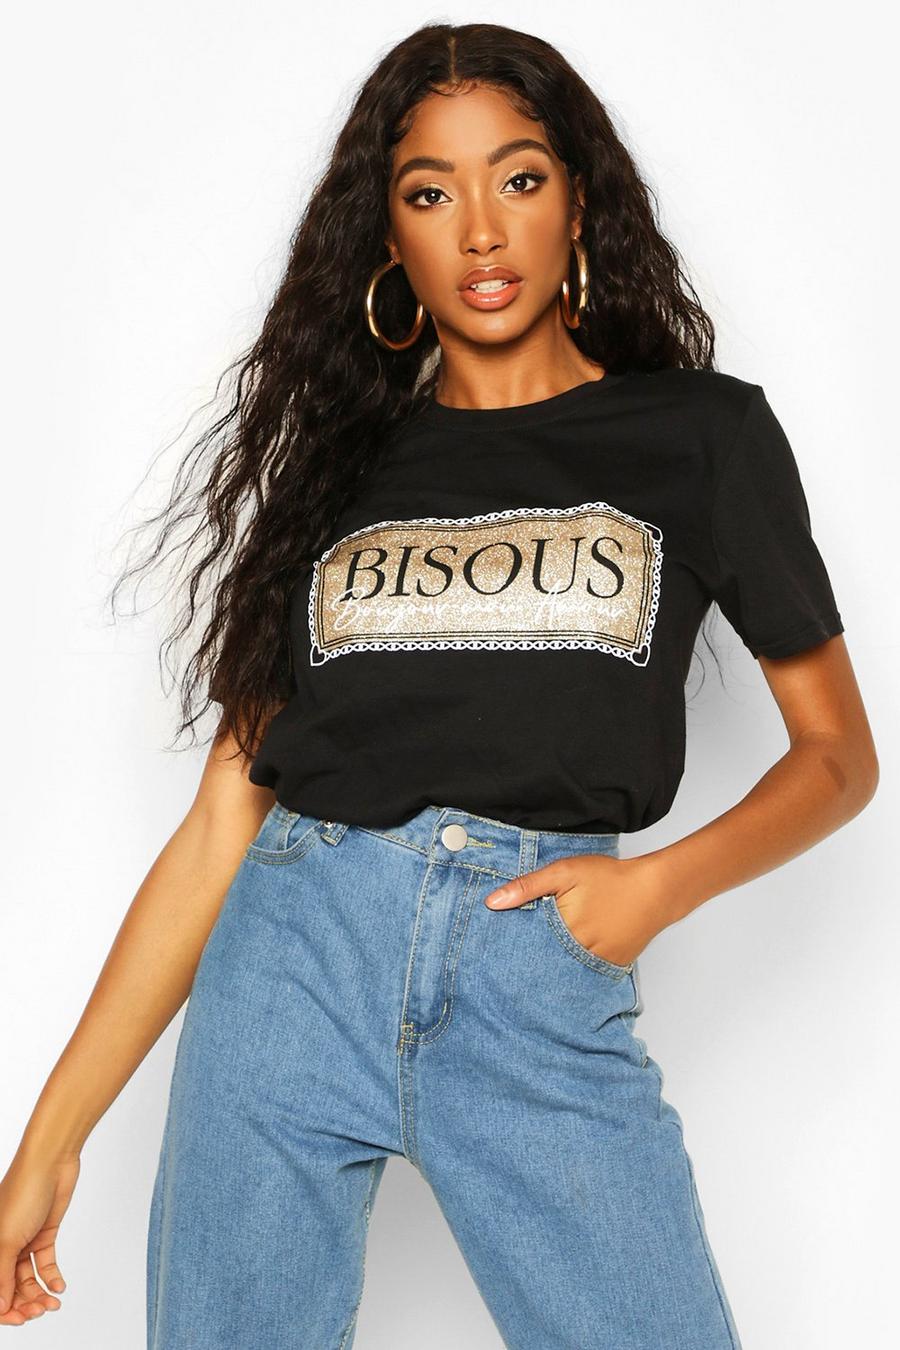 T-shirt con scritta "Bisous" glitterata image number 1